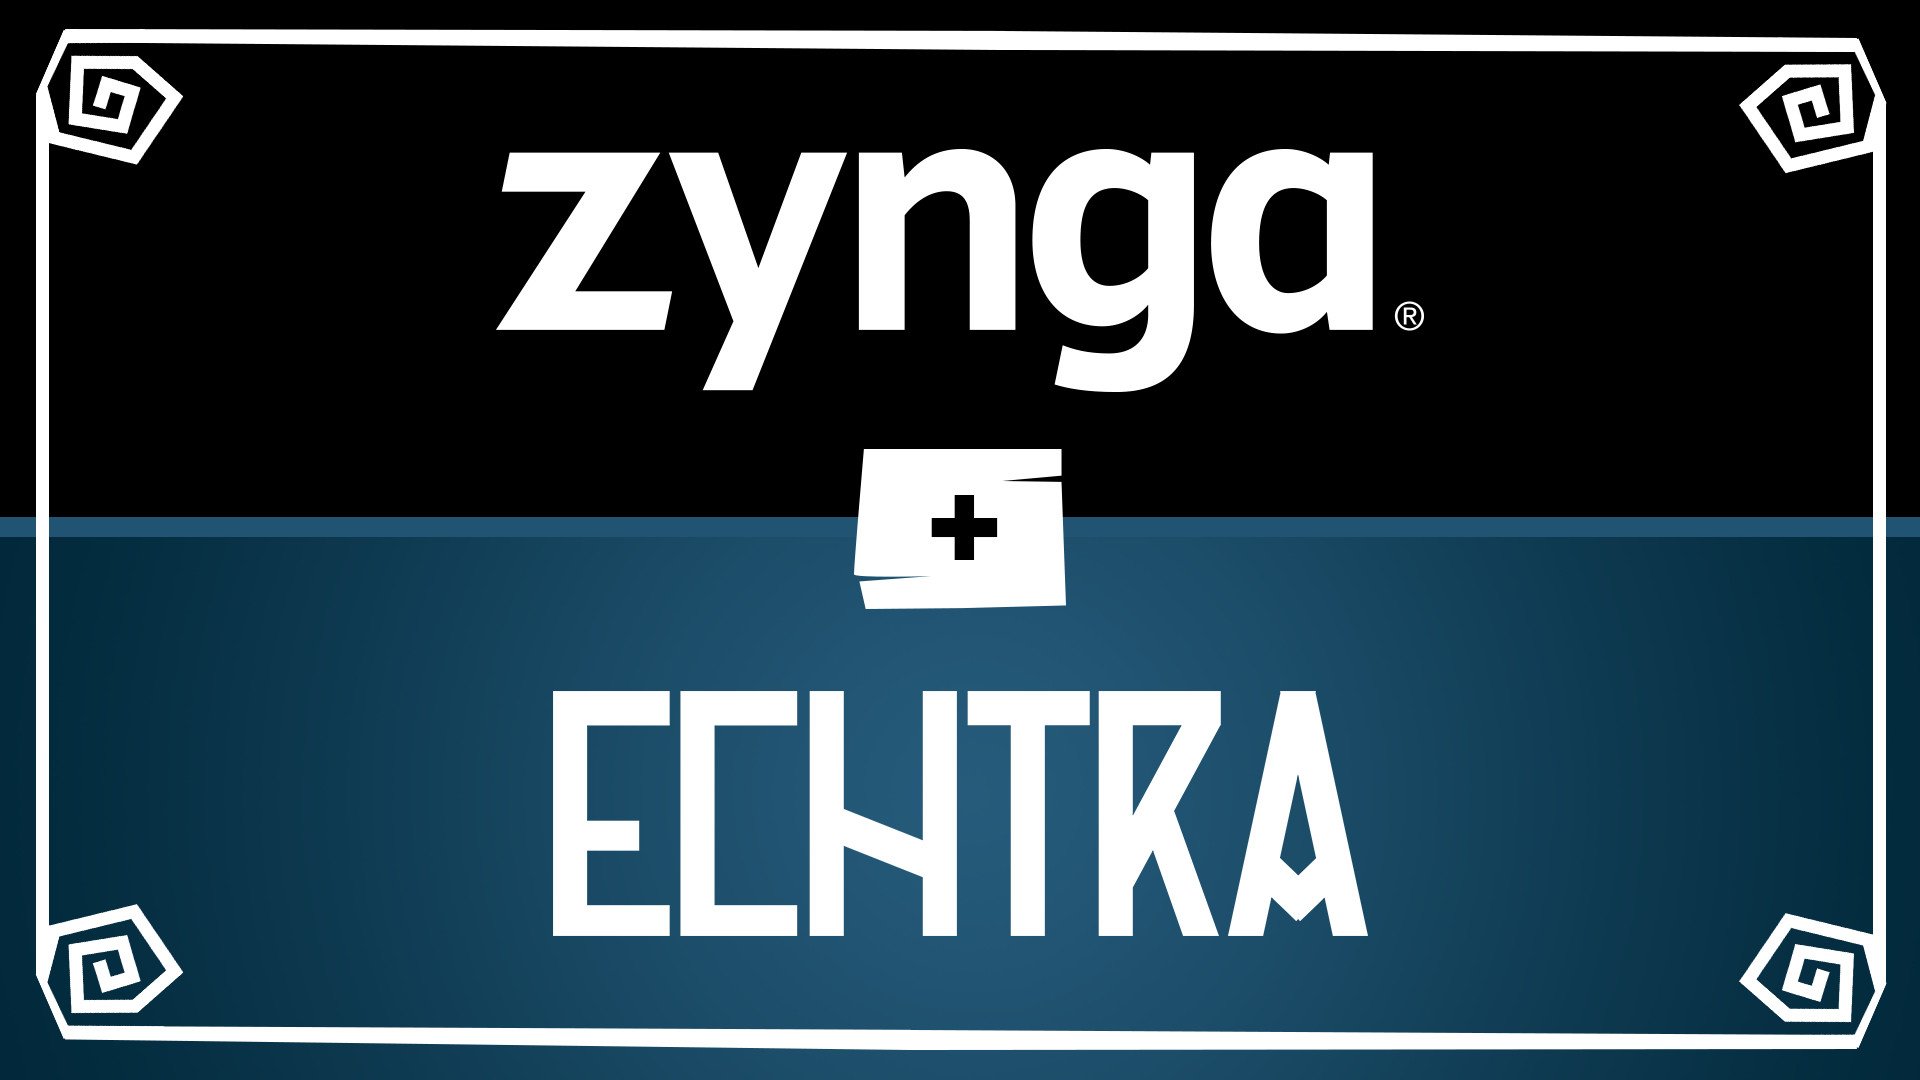 zynga-echtra-acquisition-image-01_0.jpg